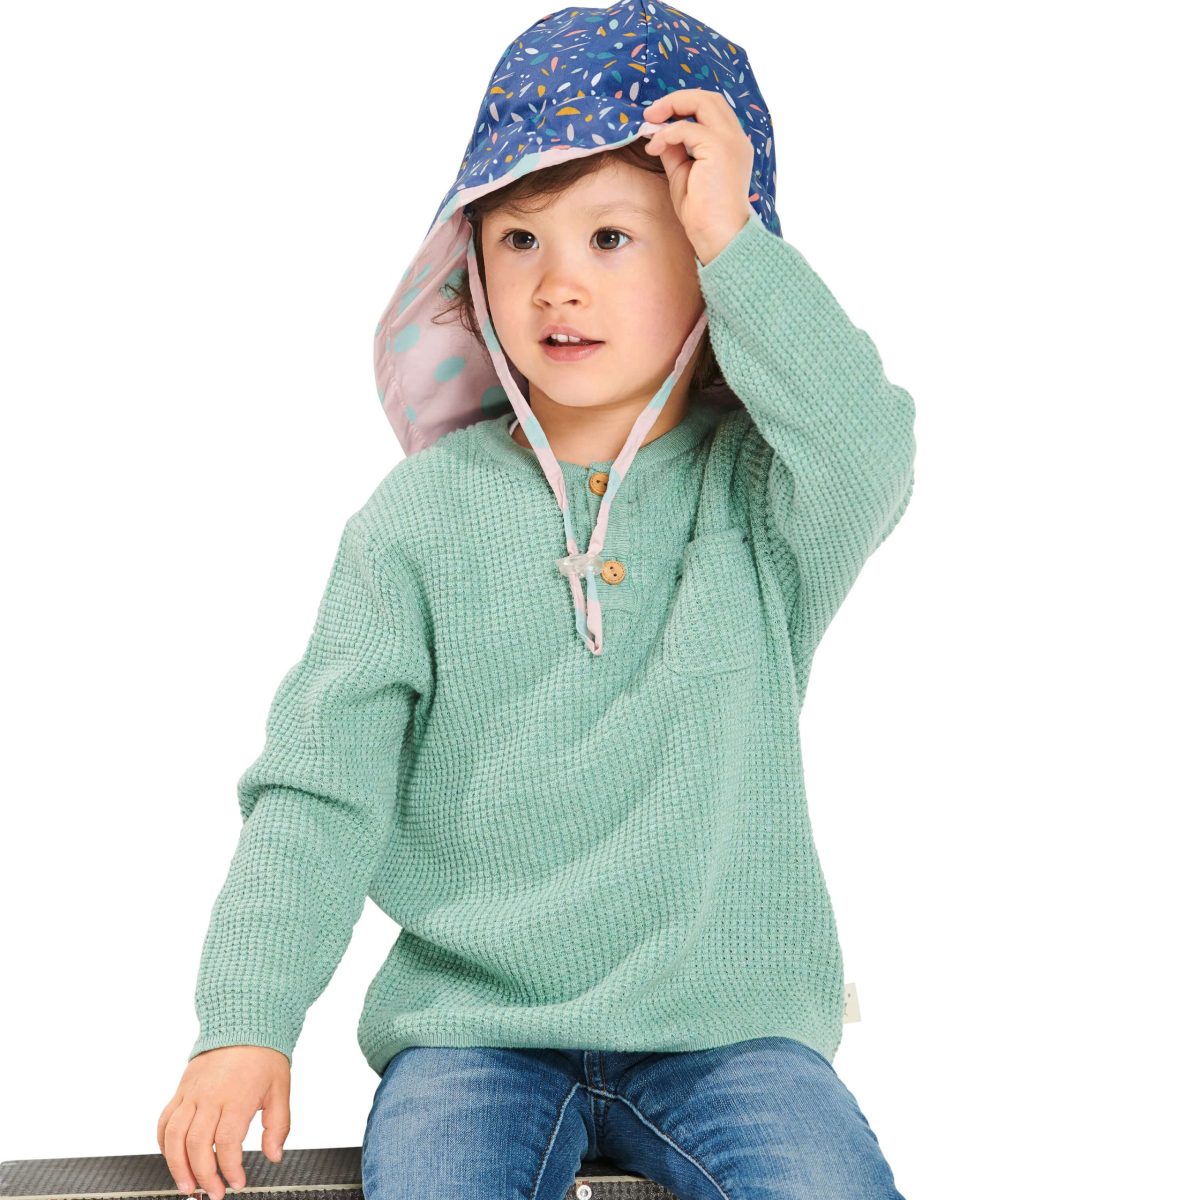 Burda Style Pattern 9279 Toddlers' Onesie and Hat